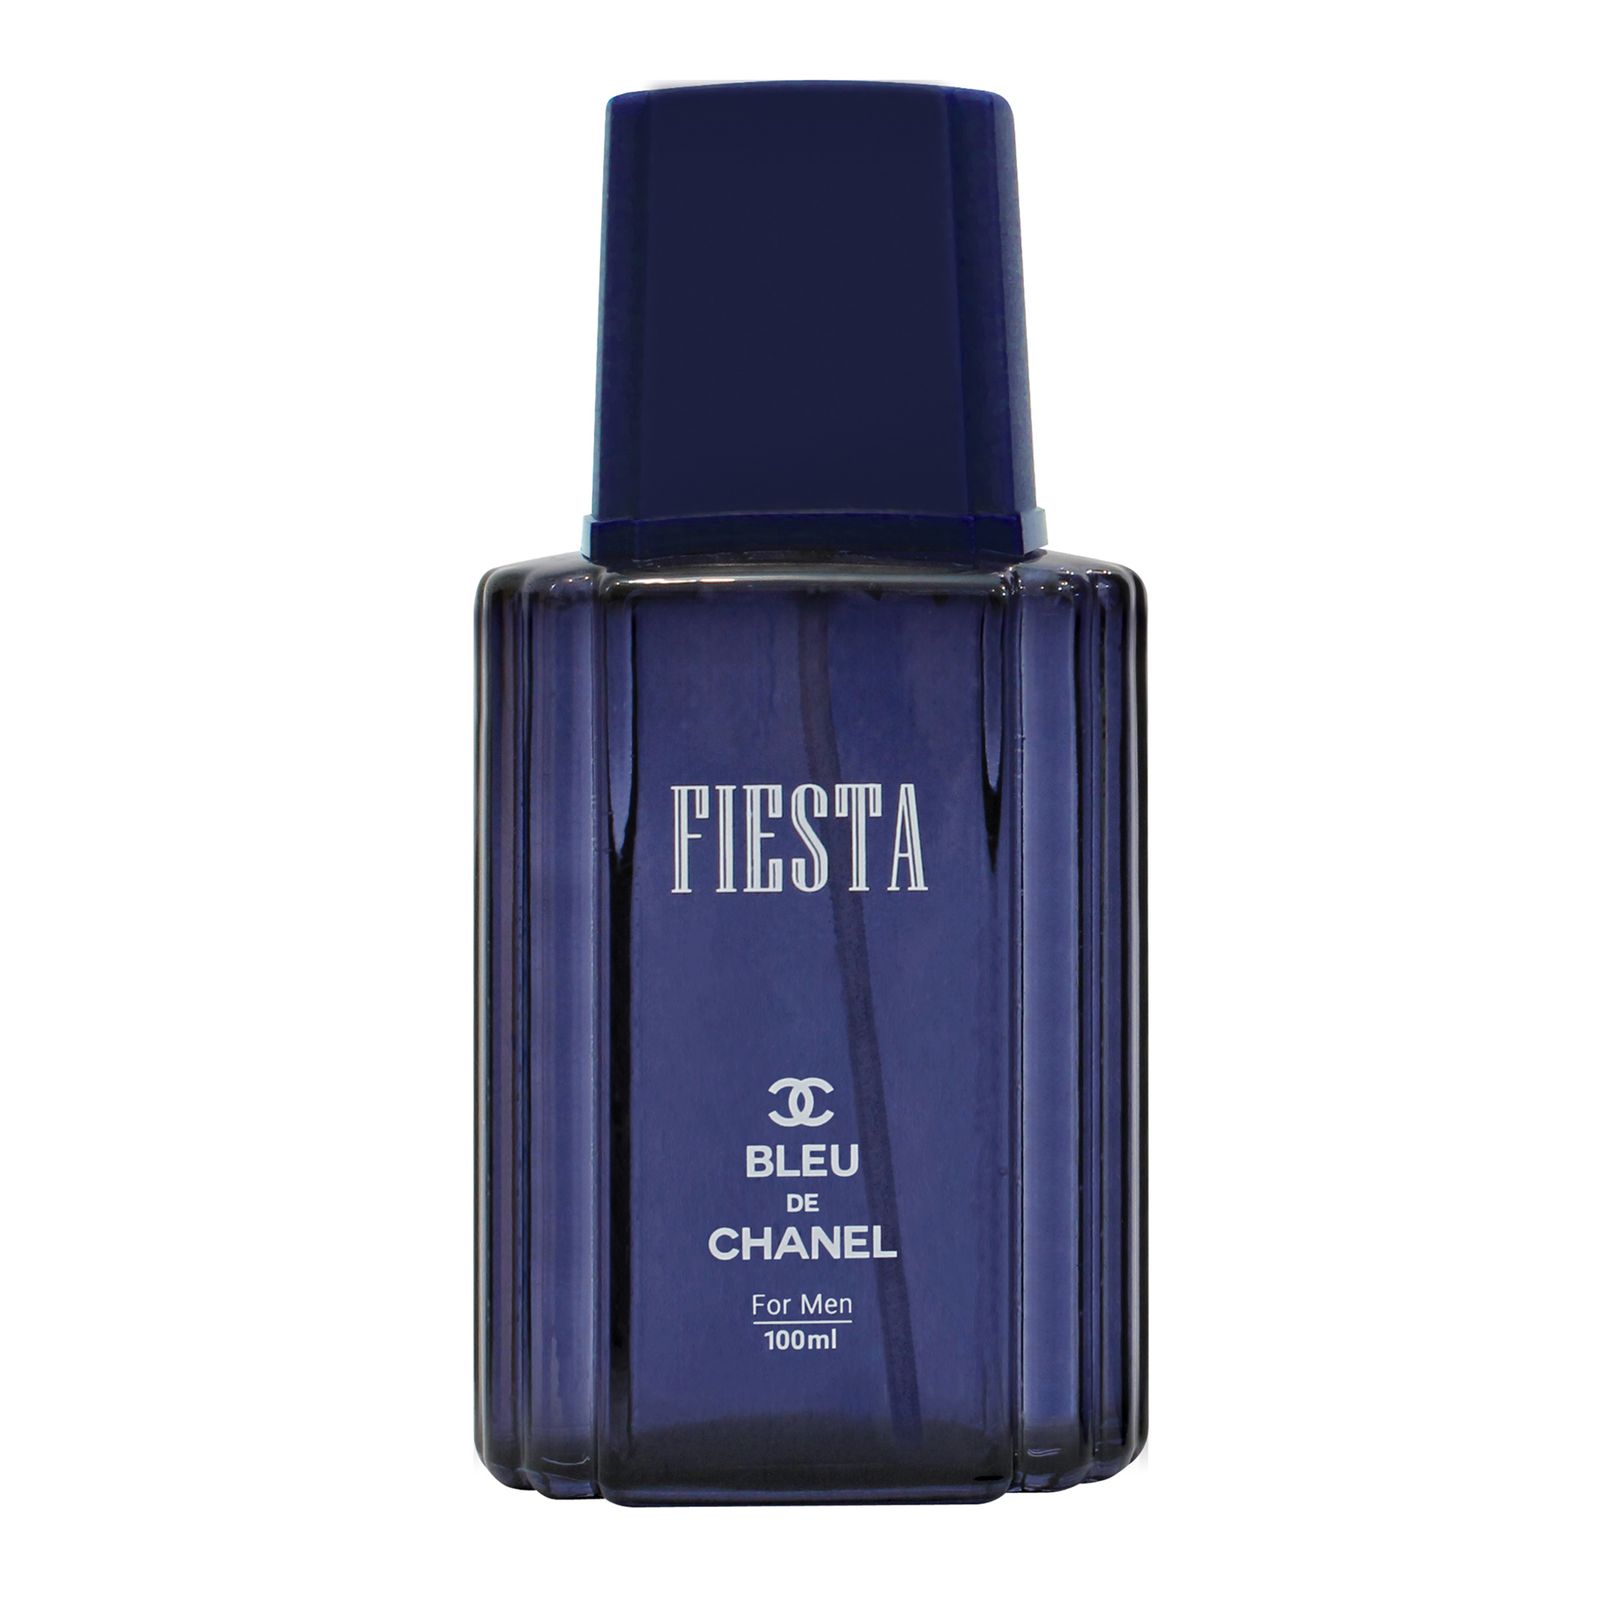 ادو پرفیوم مردانه فیستا مدل Bleu de Chanel حجم 100 میلی لیتر -  - 2